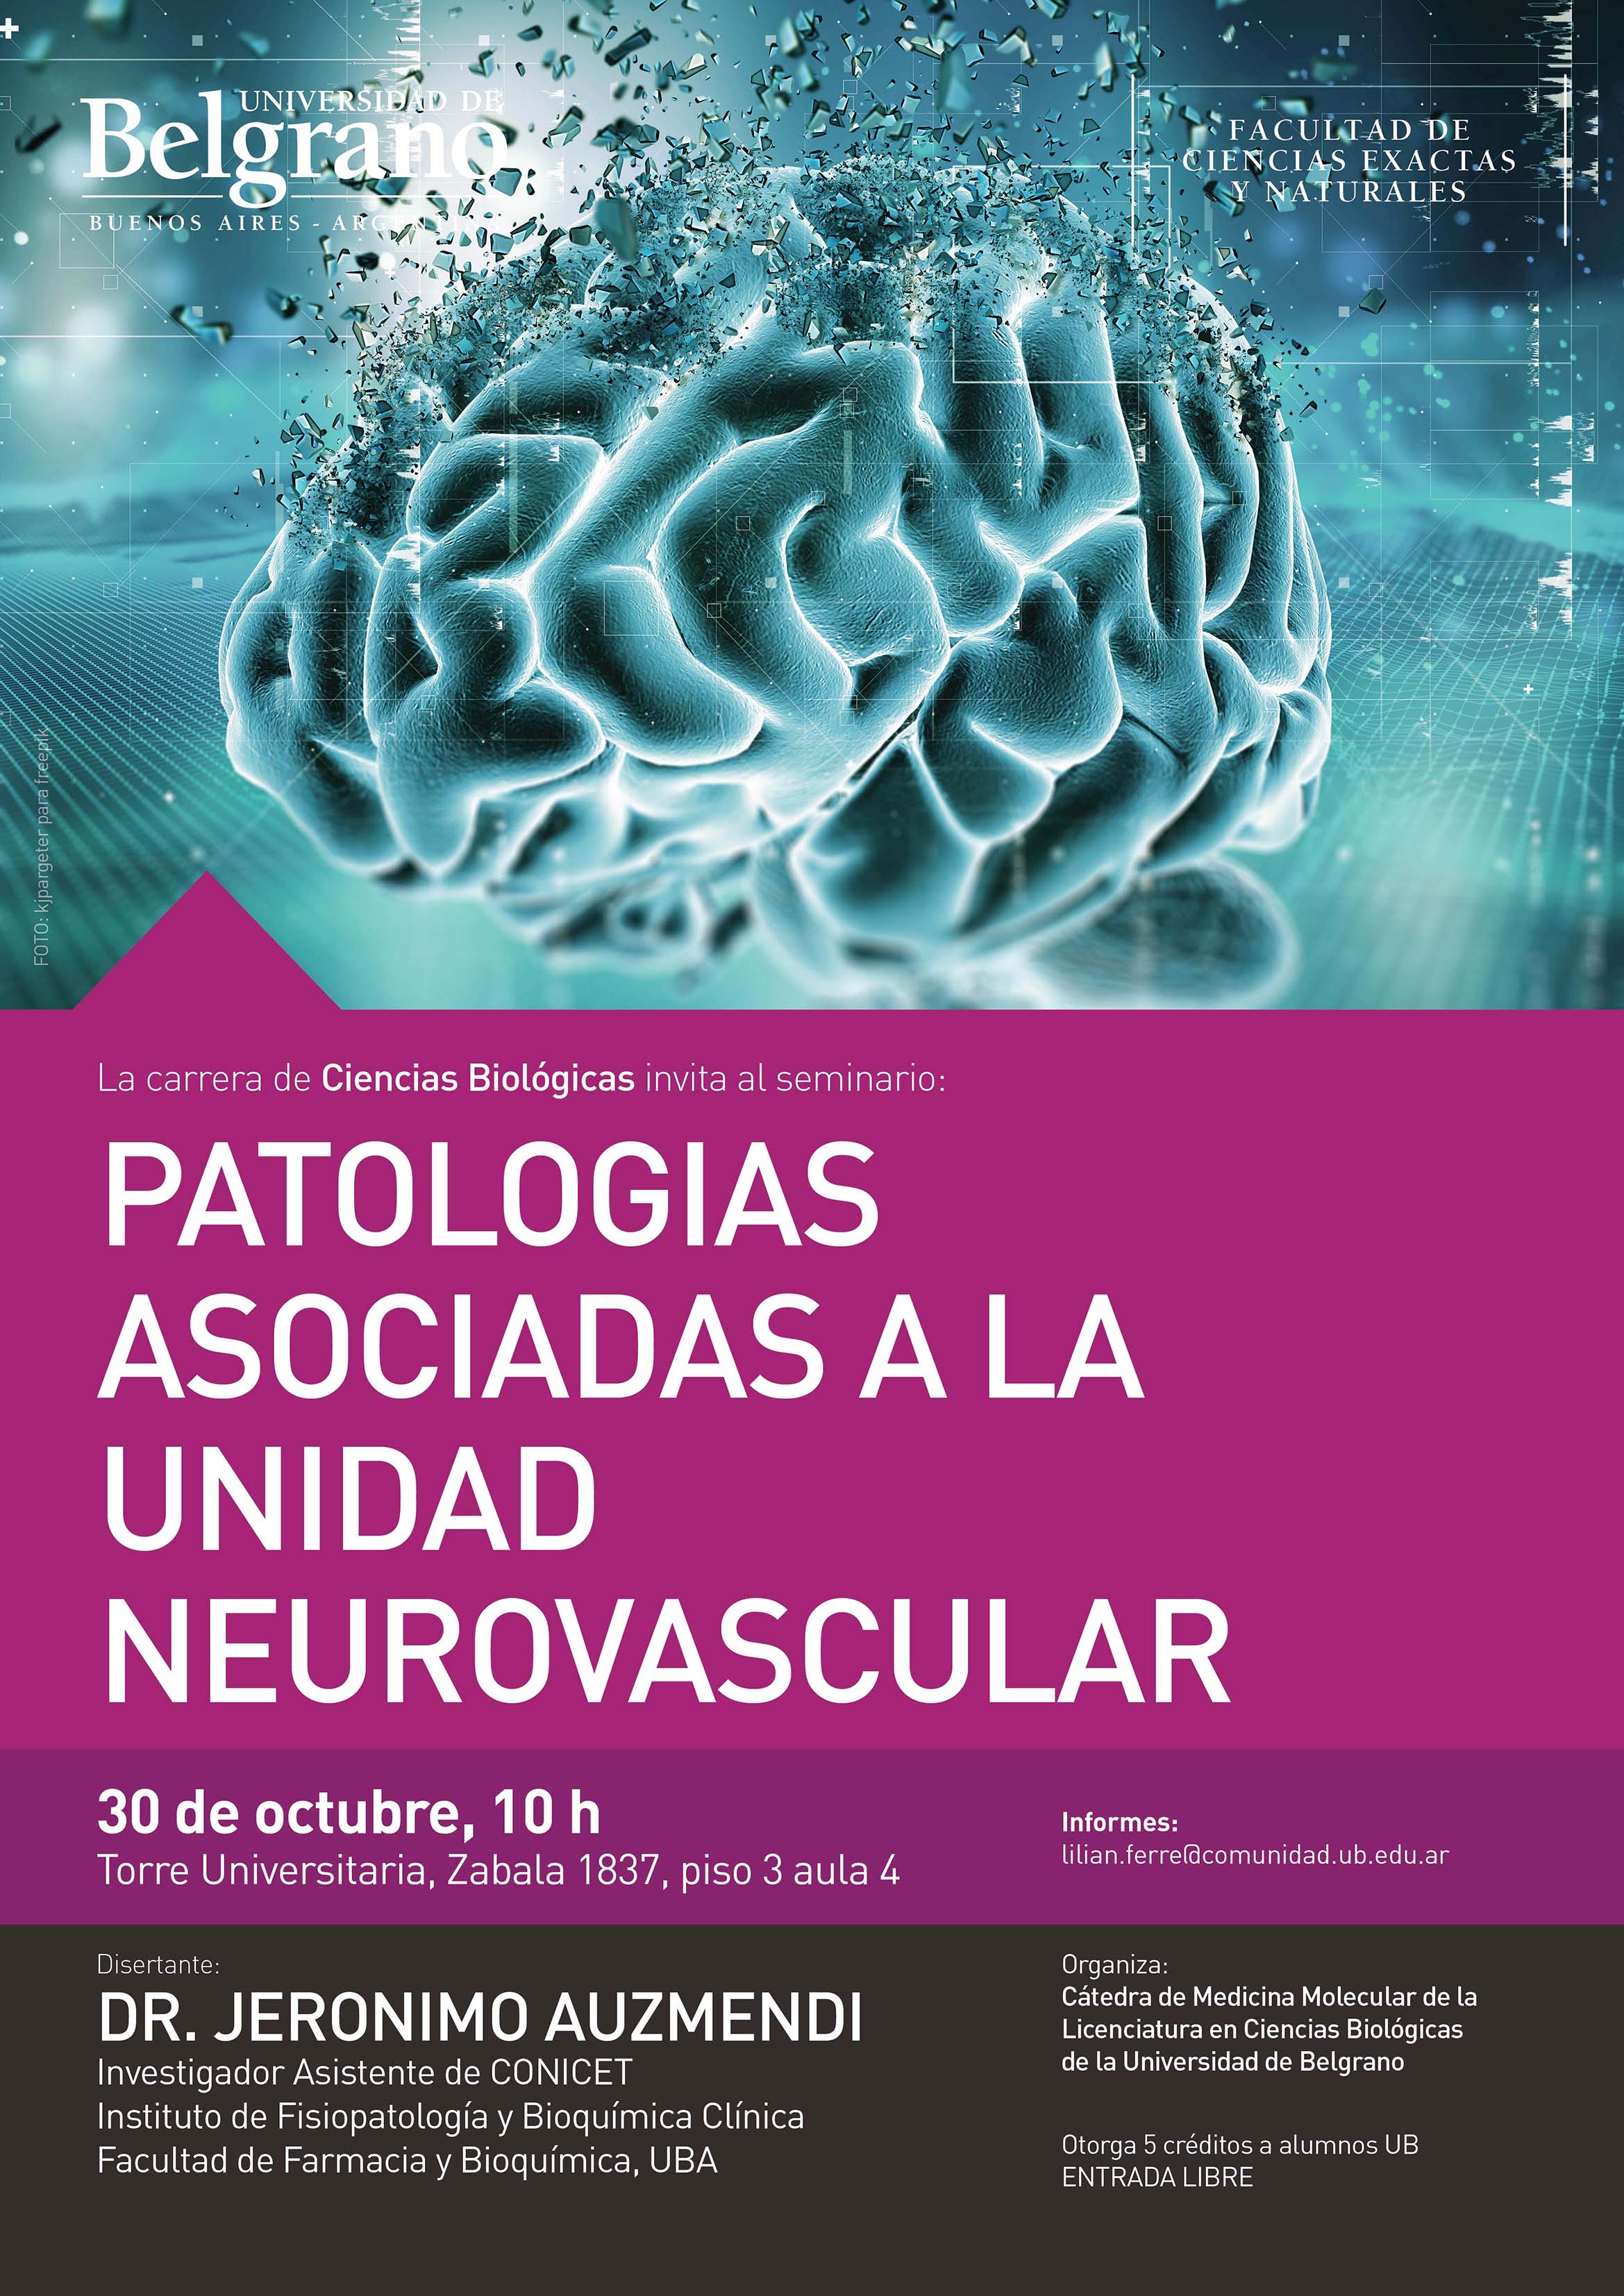 Patologías asociadas a la unidad neurovascular